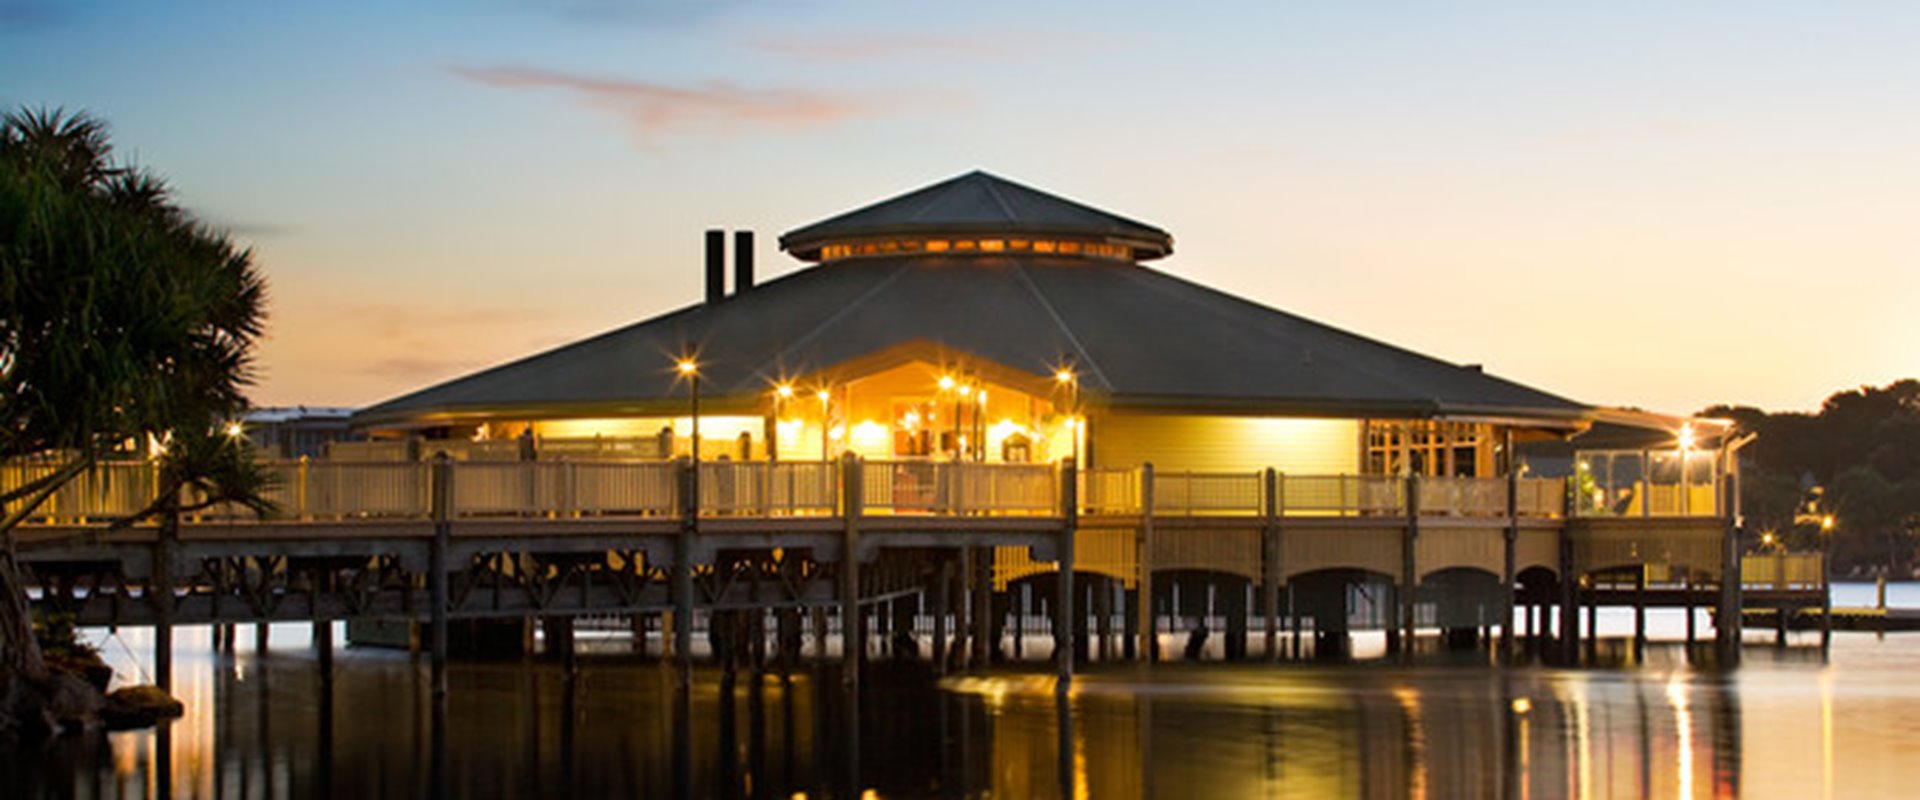 Novotel Twin Waters  | Conference Venues Sunshine Coast | Conference Venues Queensland